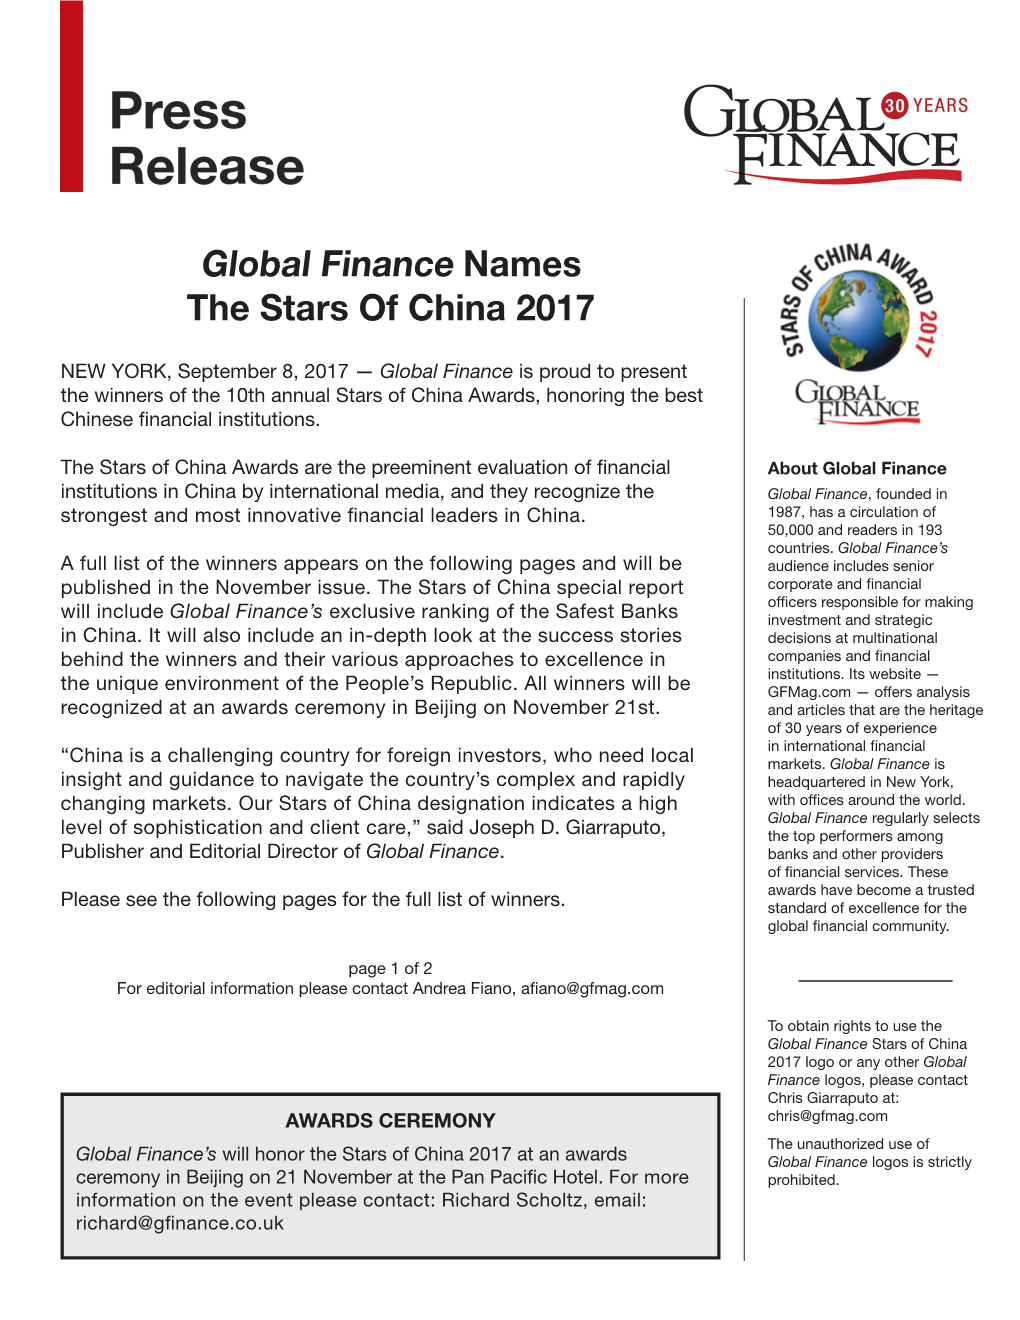 Global Finance Names the Stars of China 2017